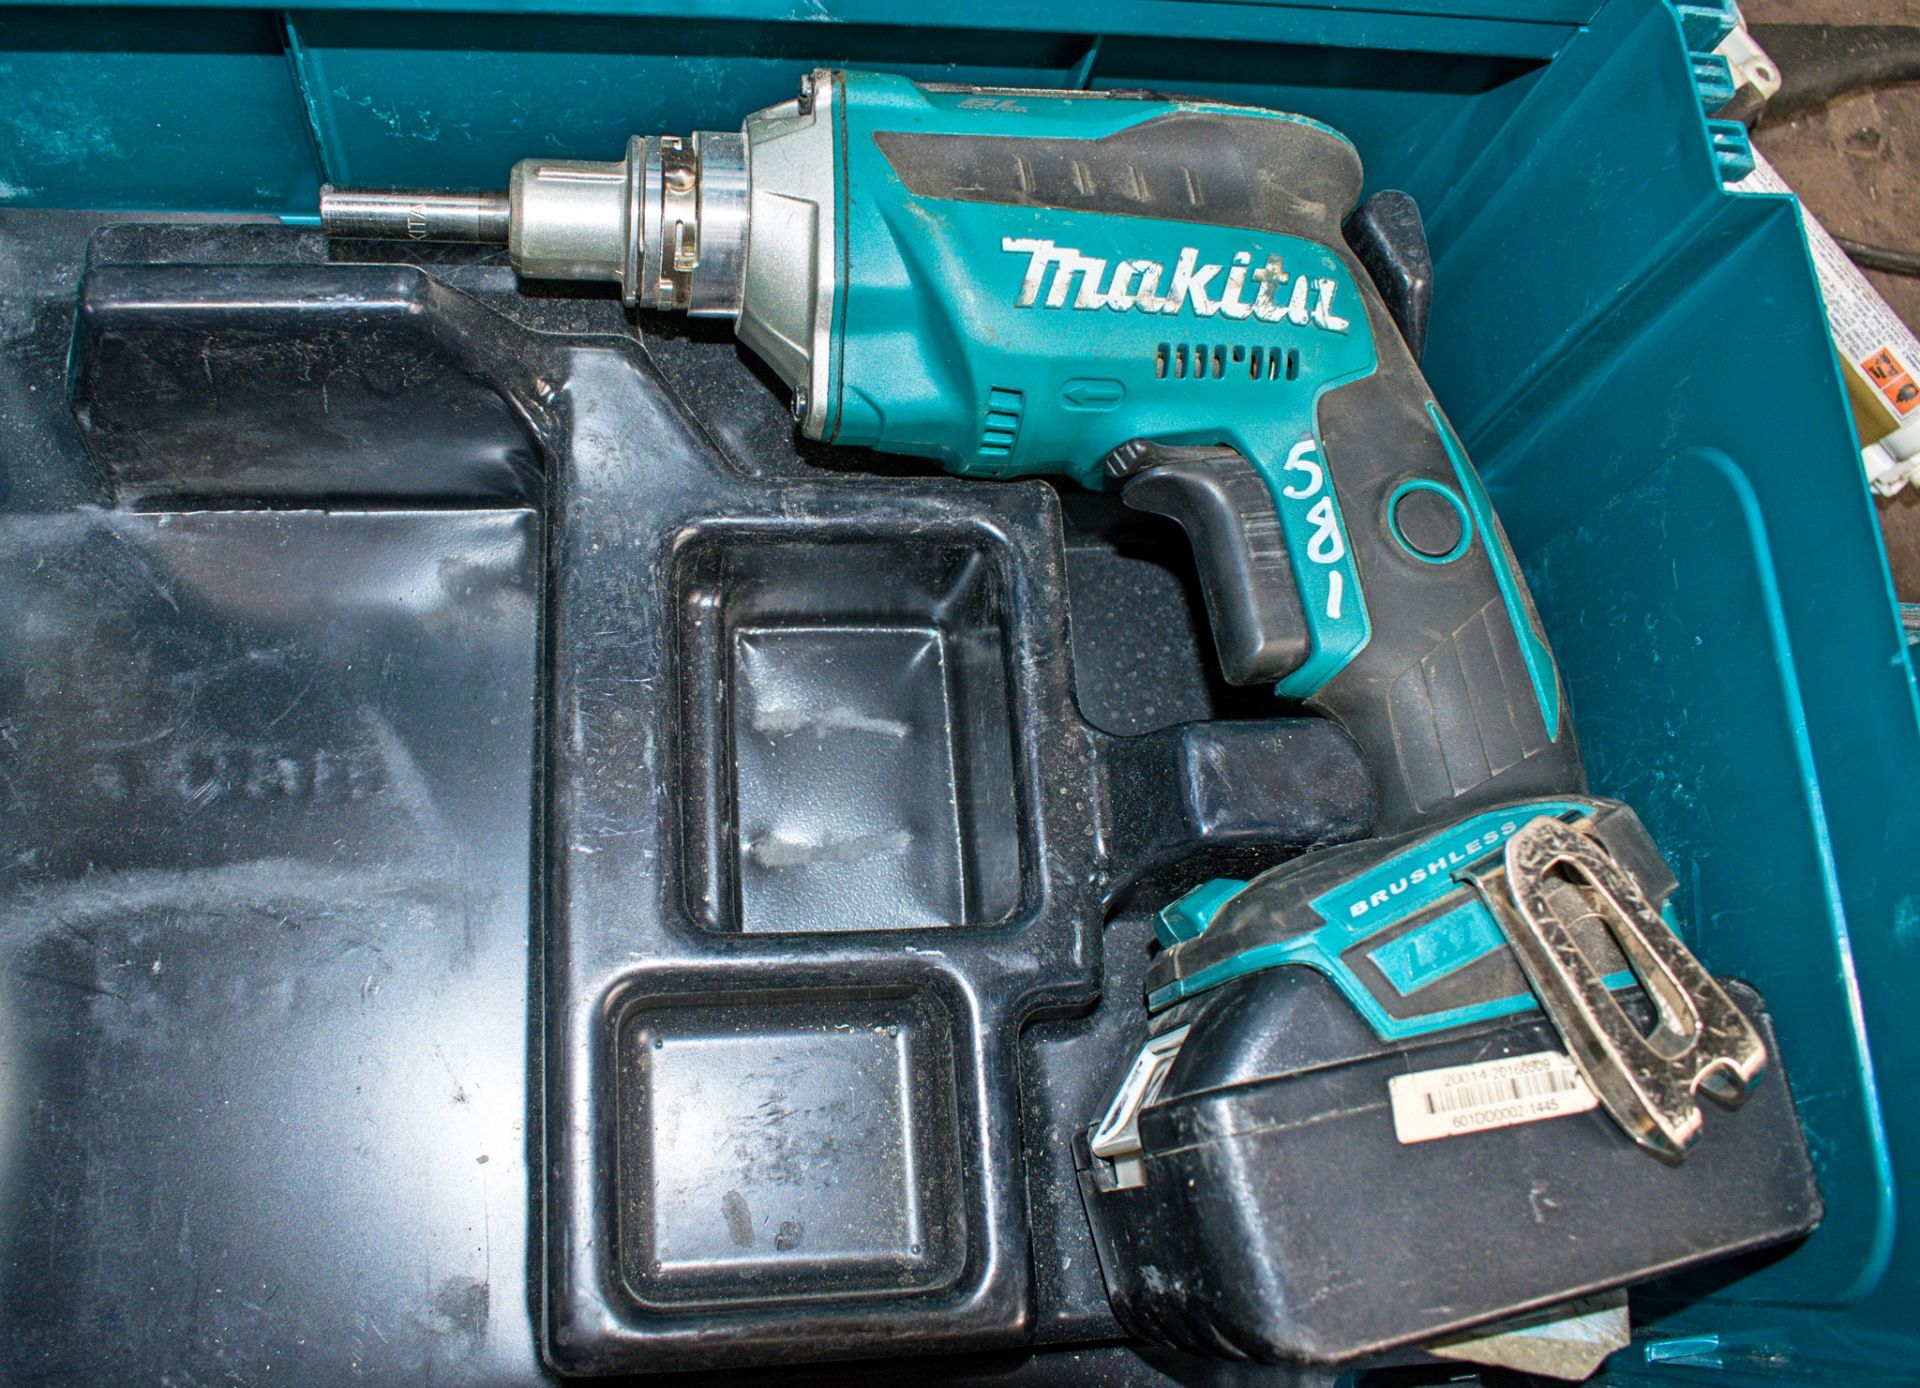 Makita 18v cordless screwgun c/w battery & carry case A703516